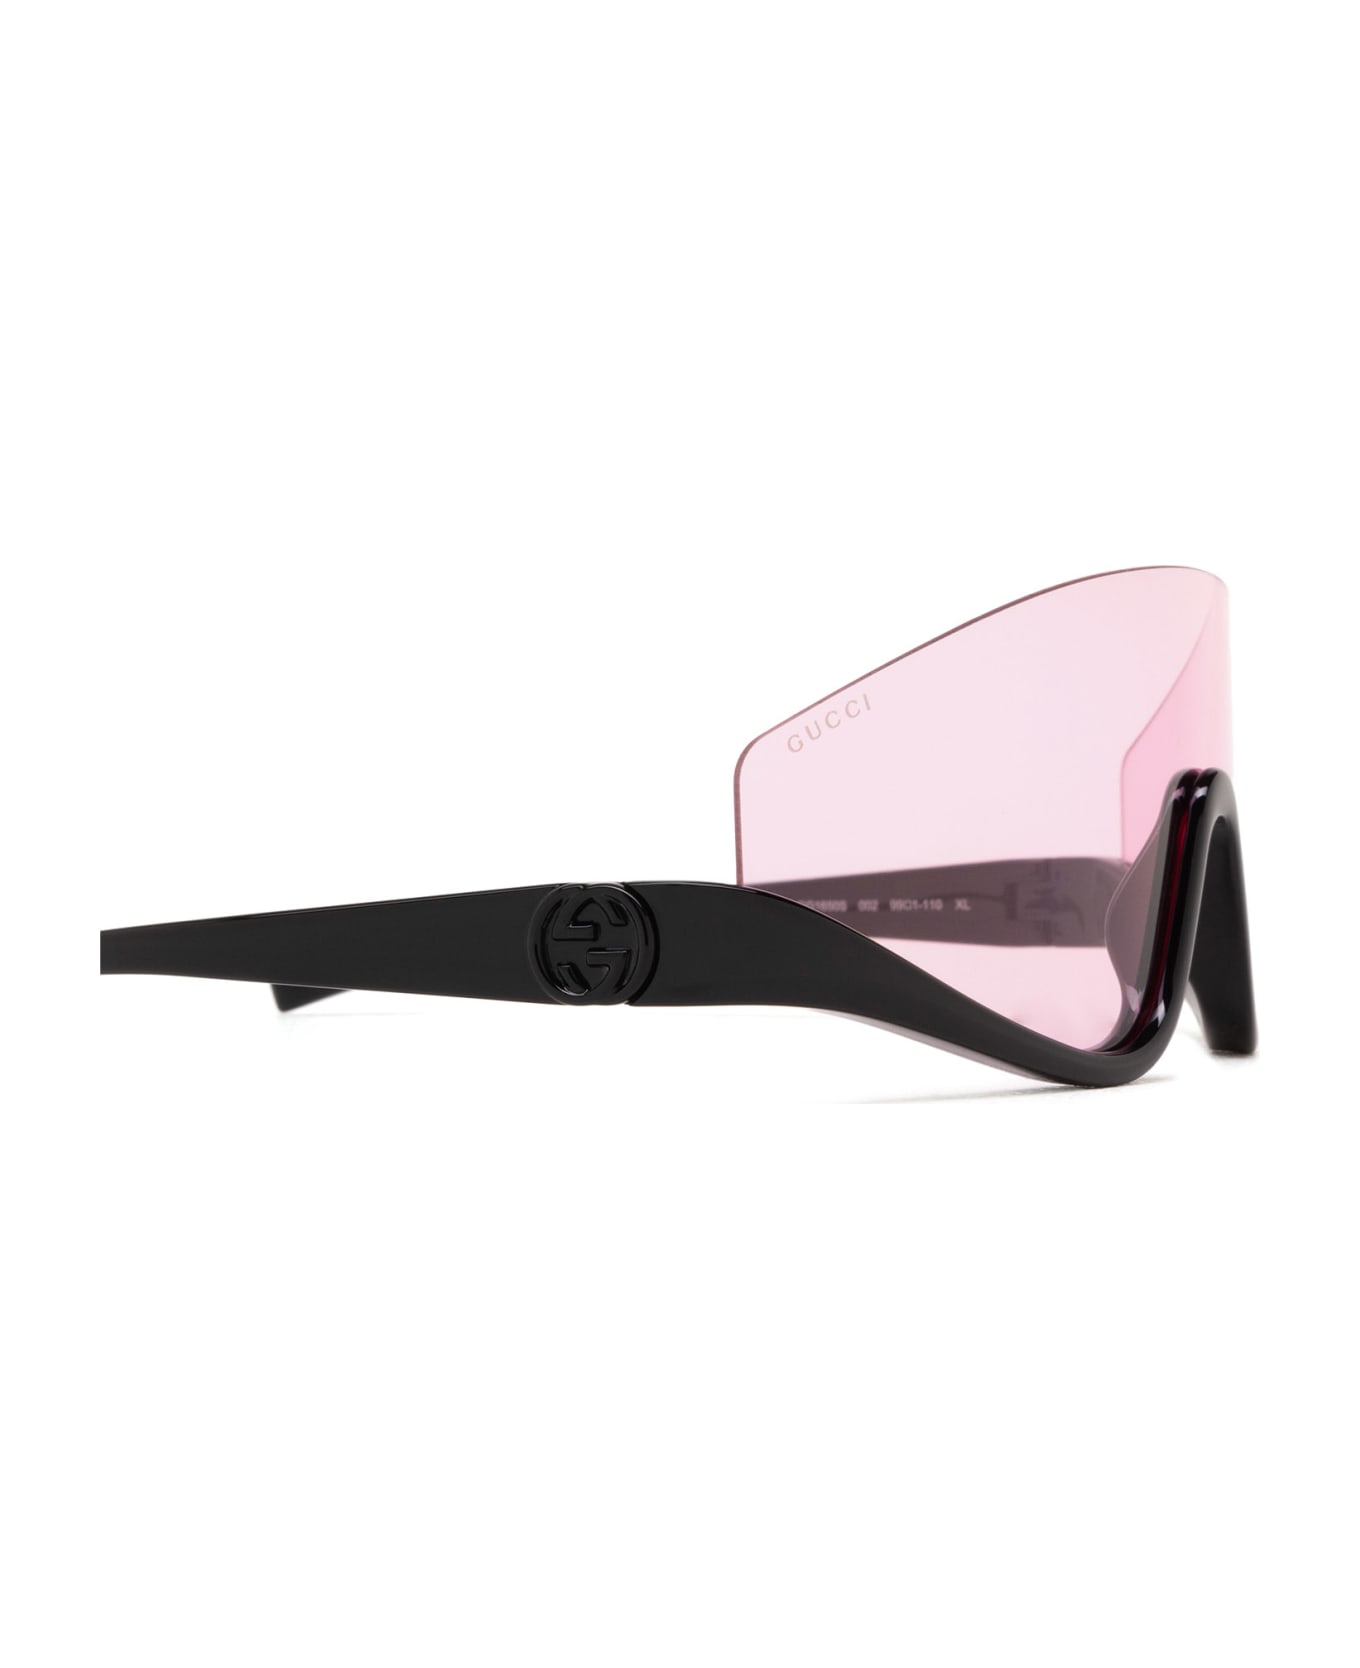 Gucci Eyewear Gg1650s Black Sunglasses - Black